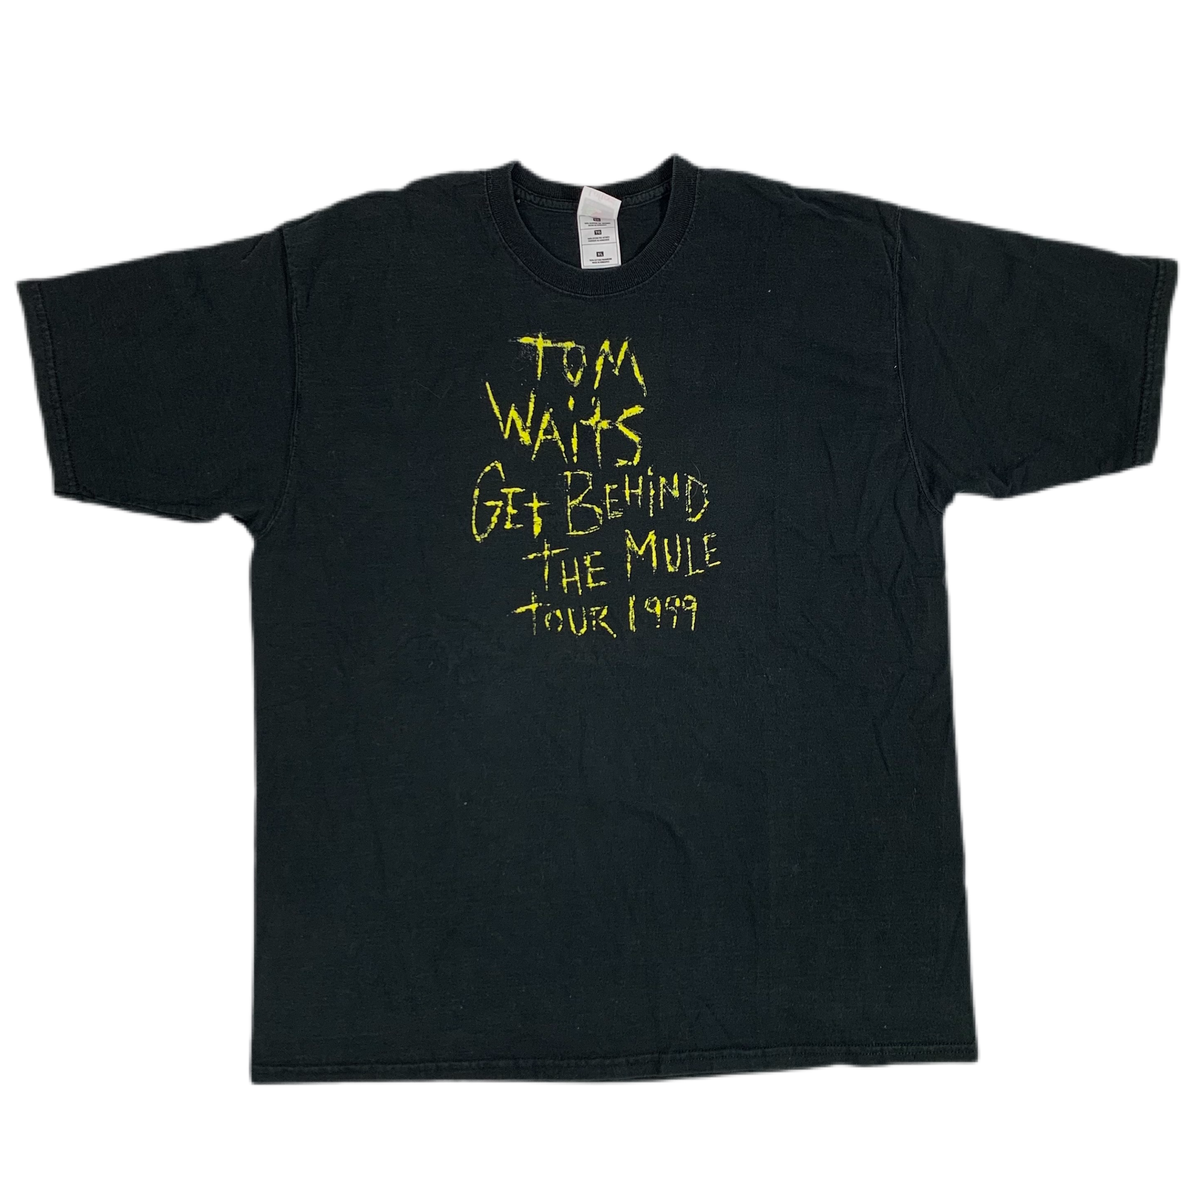 Vintage Tom Waits &quot;Get Behind The Mule&quot; T-Shirt